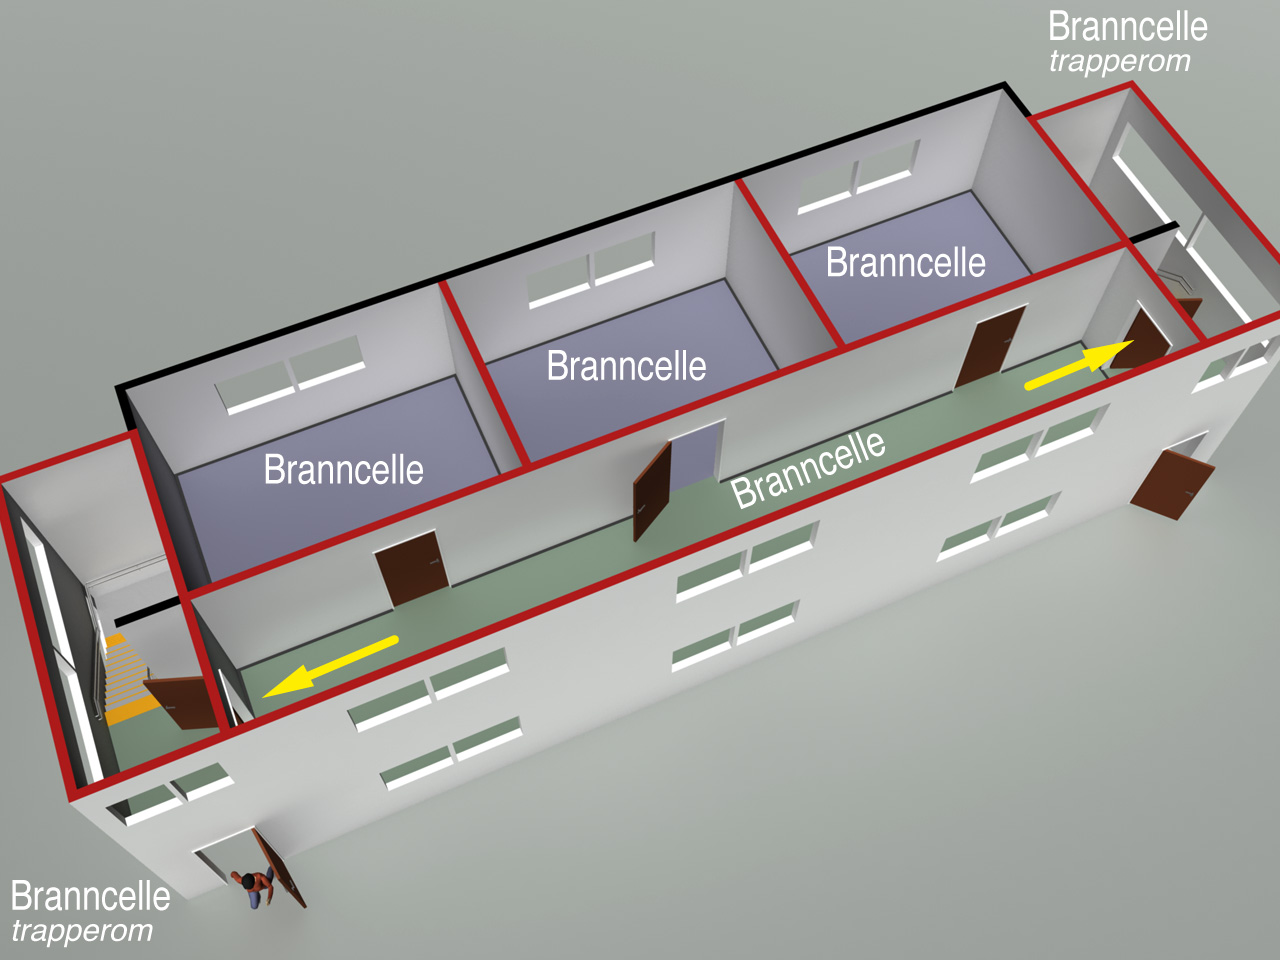 11-13 Figur 3: Branncelle med utgang til rømningsvei (korridor) med to alternative rømningsretninger som fører til to trapperom utført som rømningsvei.